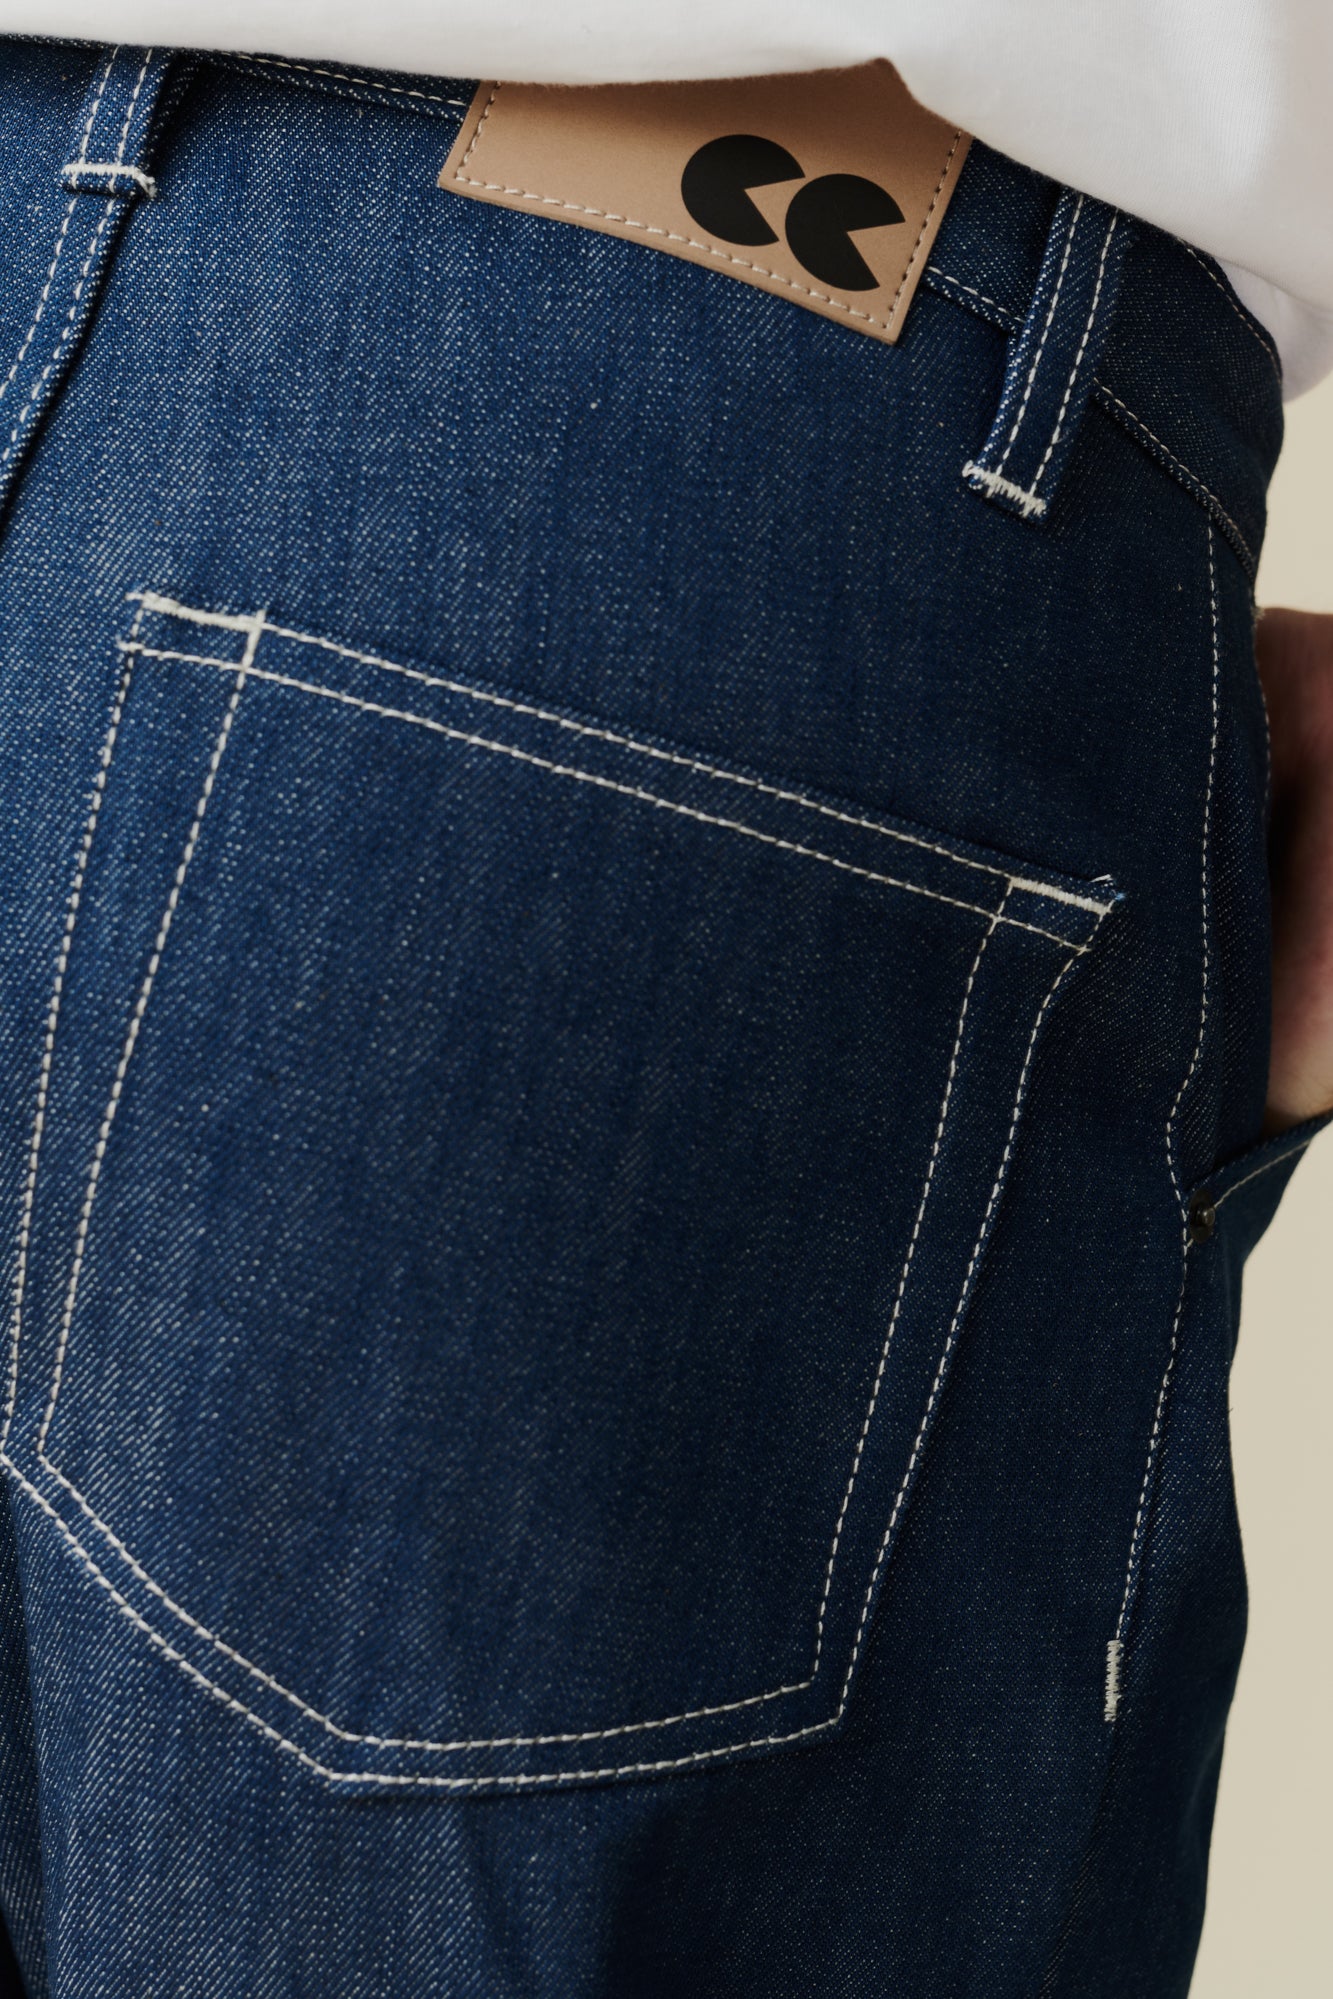 Back pocket detail of chore jean in blue, belt loops and jean belt